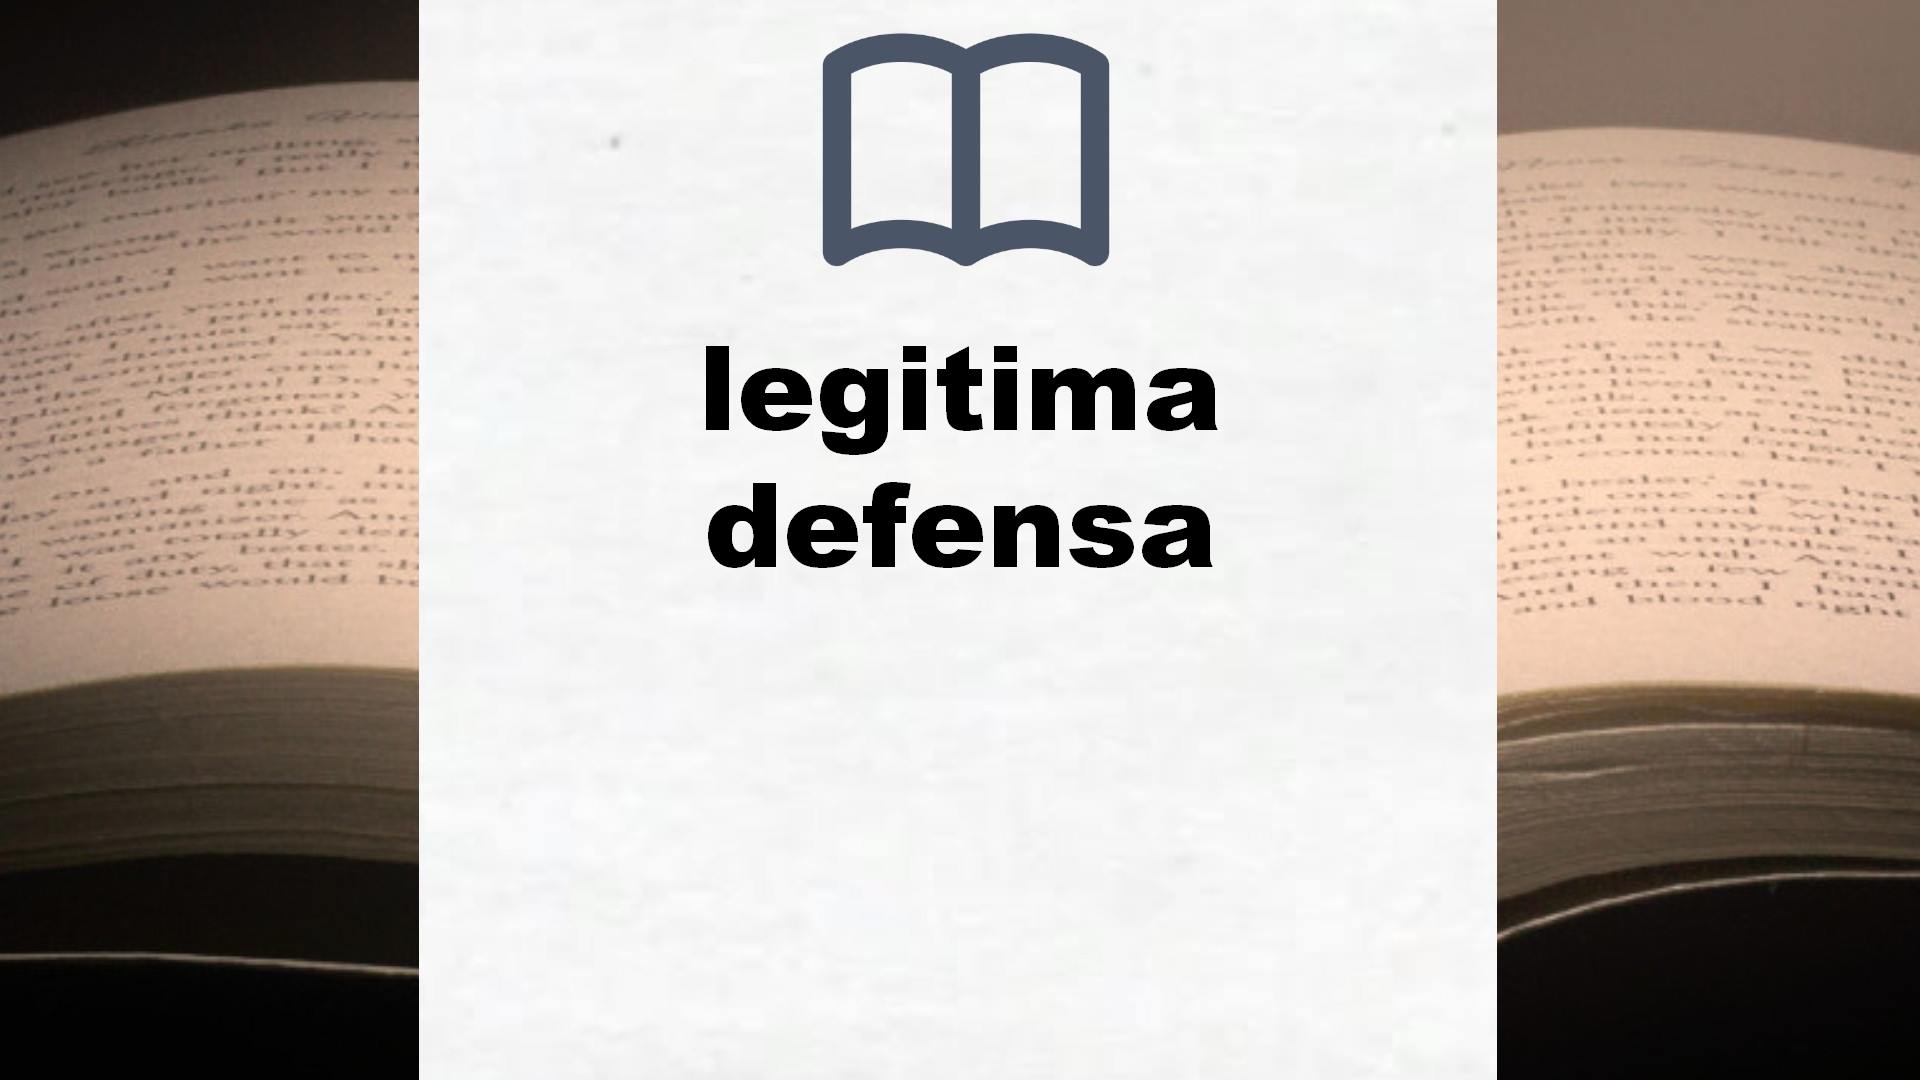 Libros sobre legitima defensa